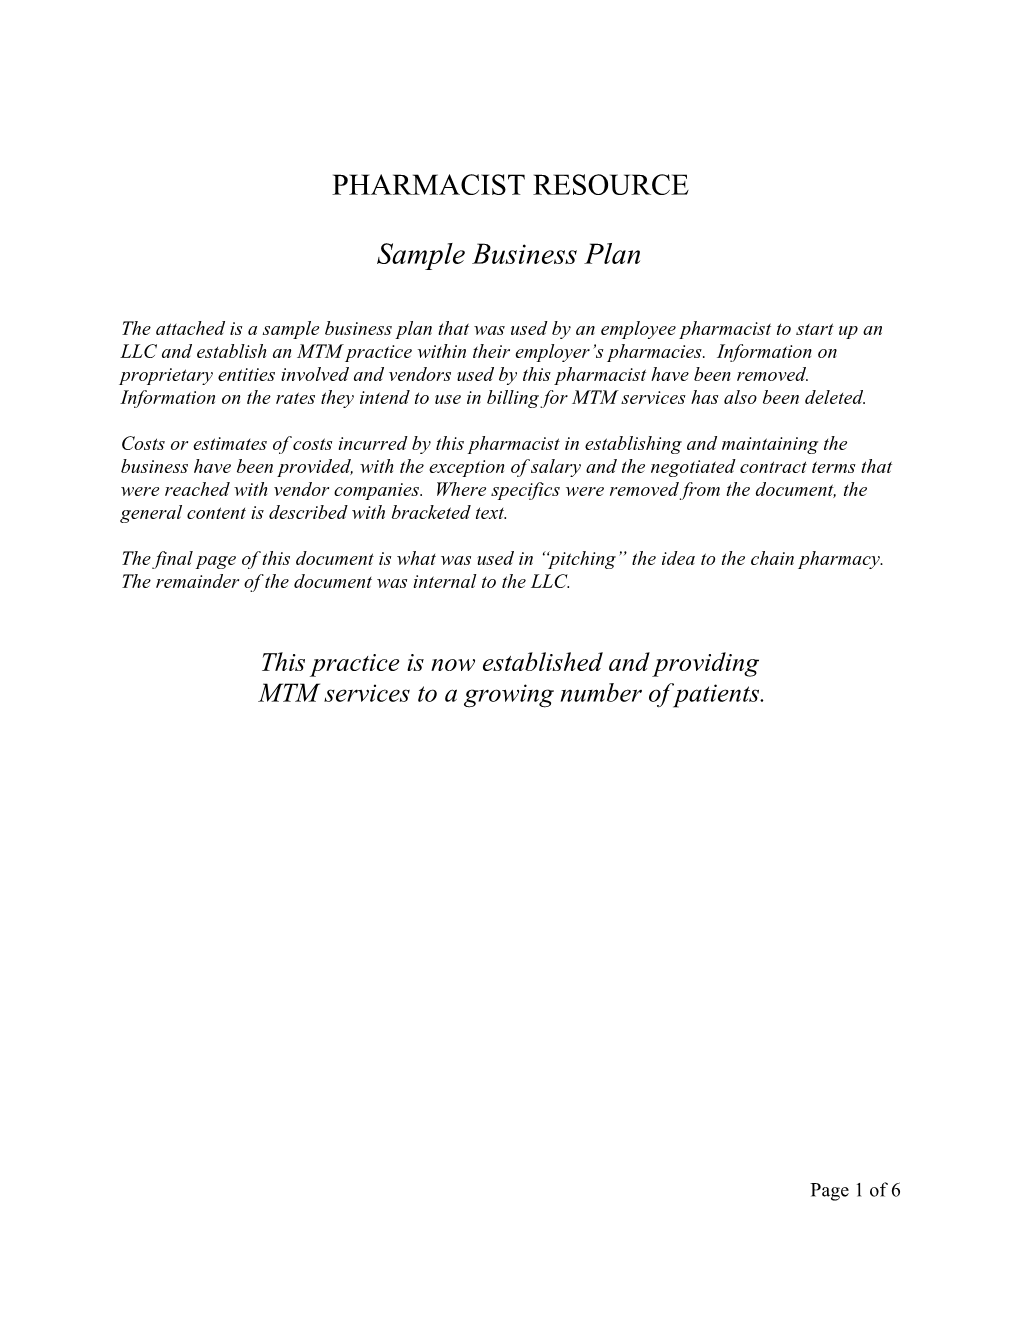 Pharmacist Resource